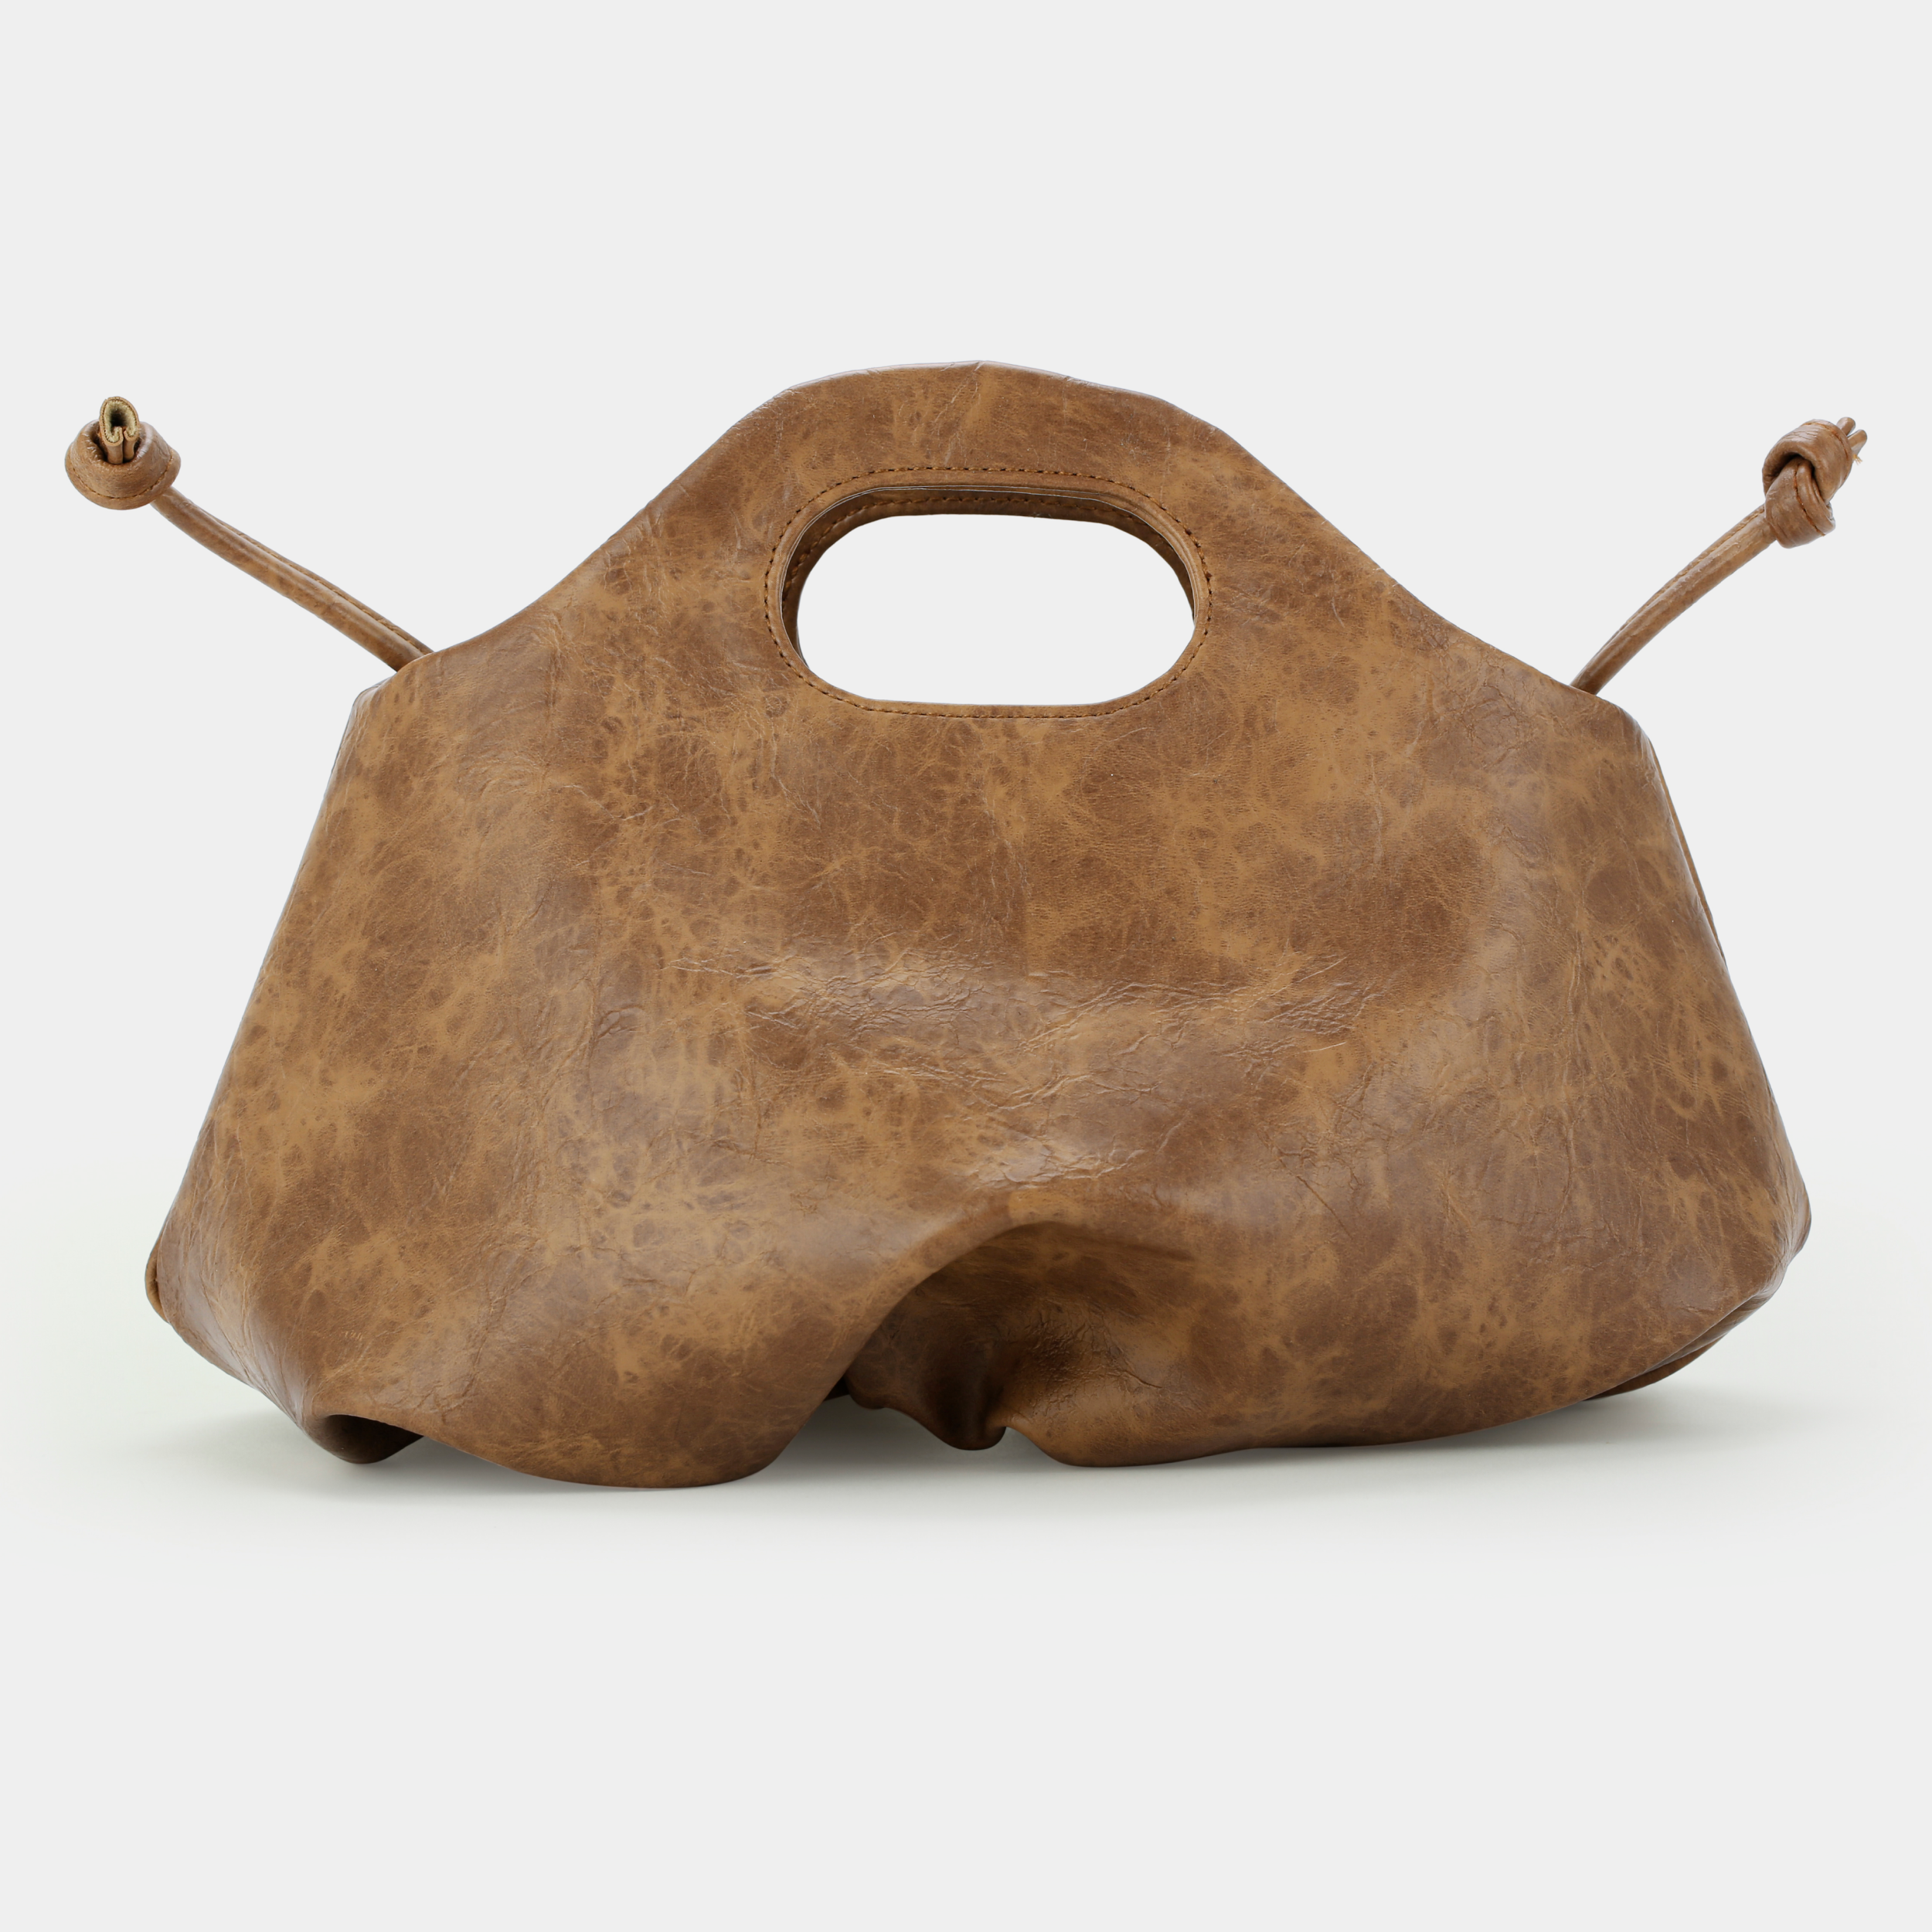 Flower M (medium) handbag in maroon brown